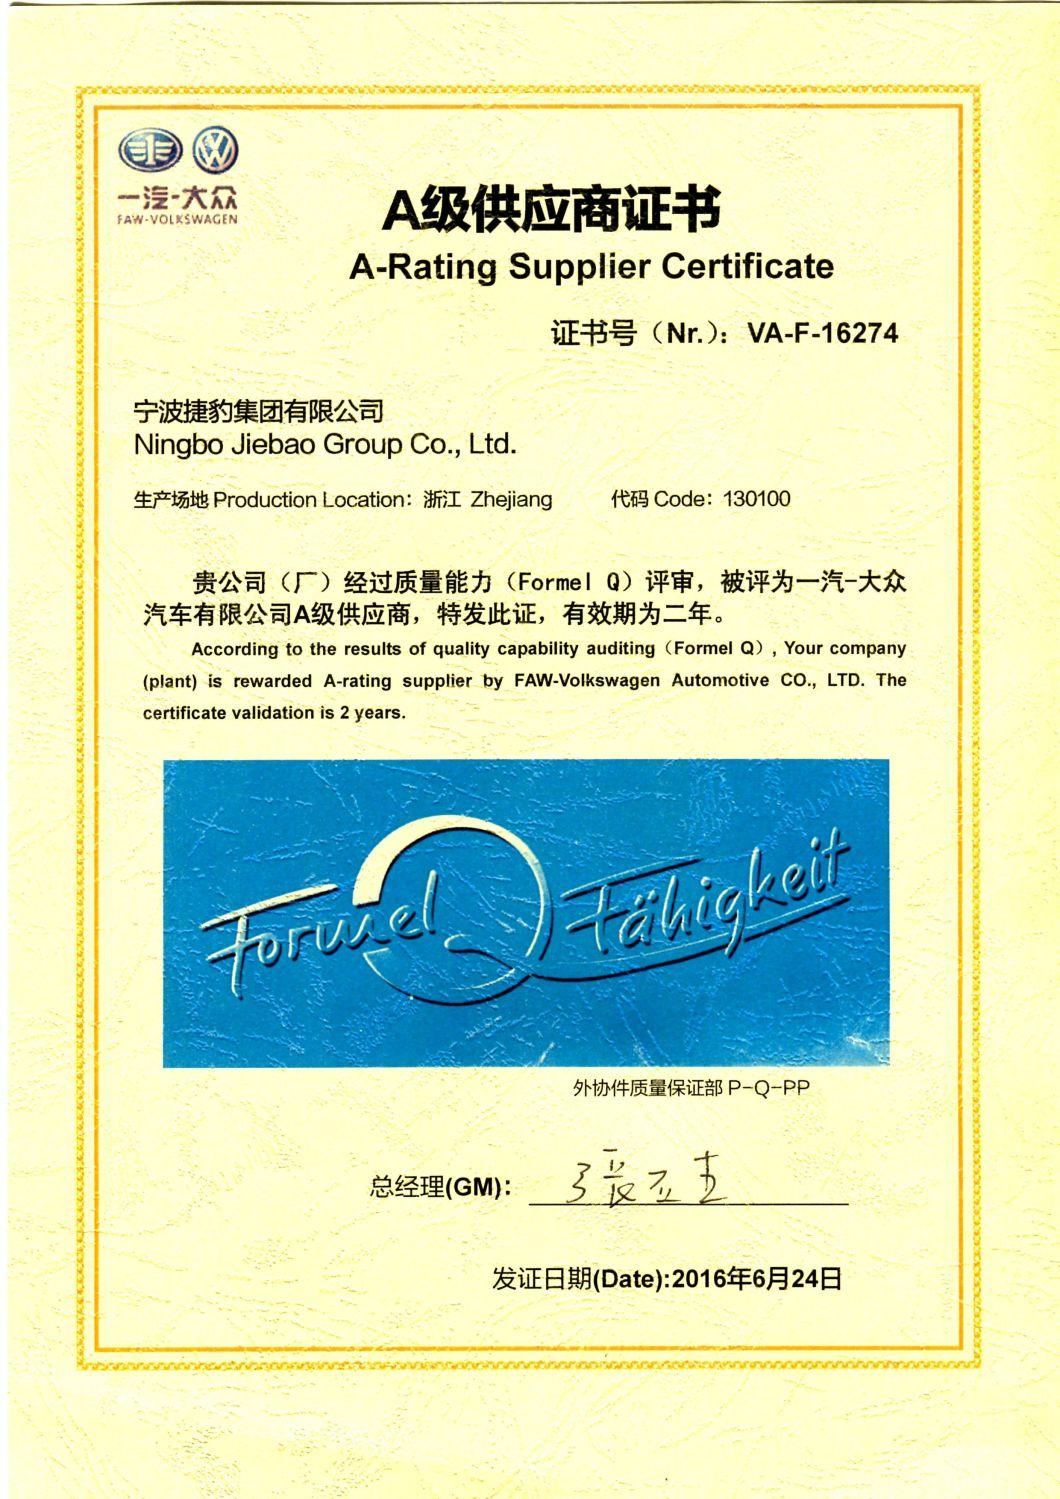 General Motors Belt Maker - Jiebao High Quality Neoprene Transmission Parts Fan Automotive Textile Garment Packaging Agricultural Machinery Timing Belt